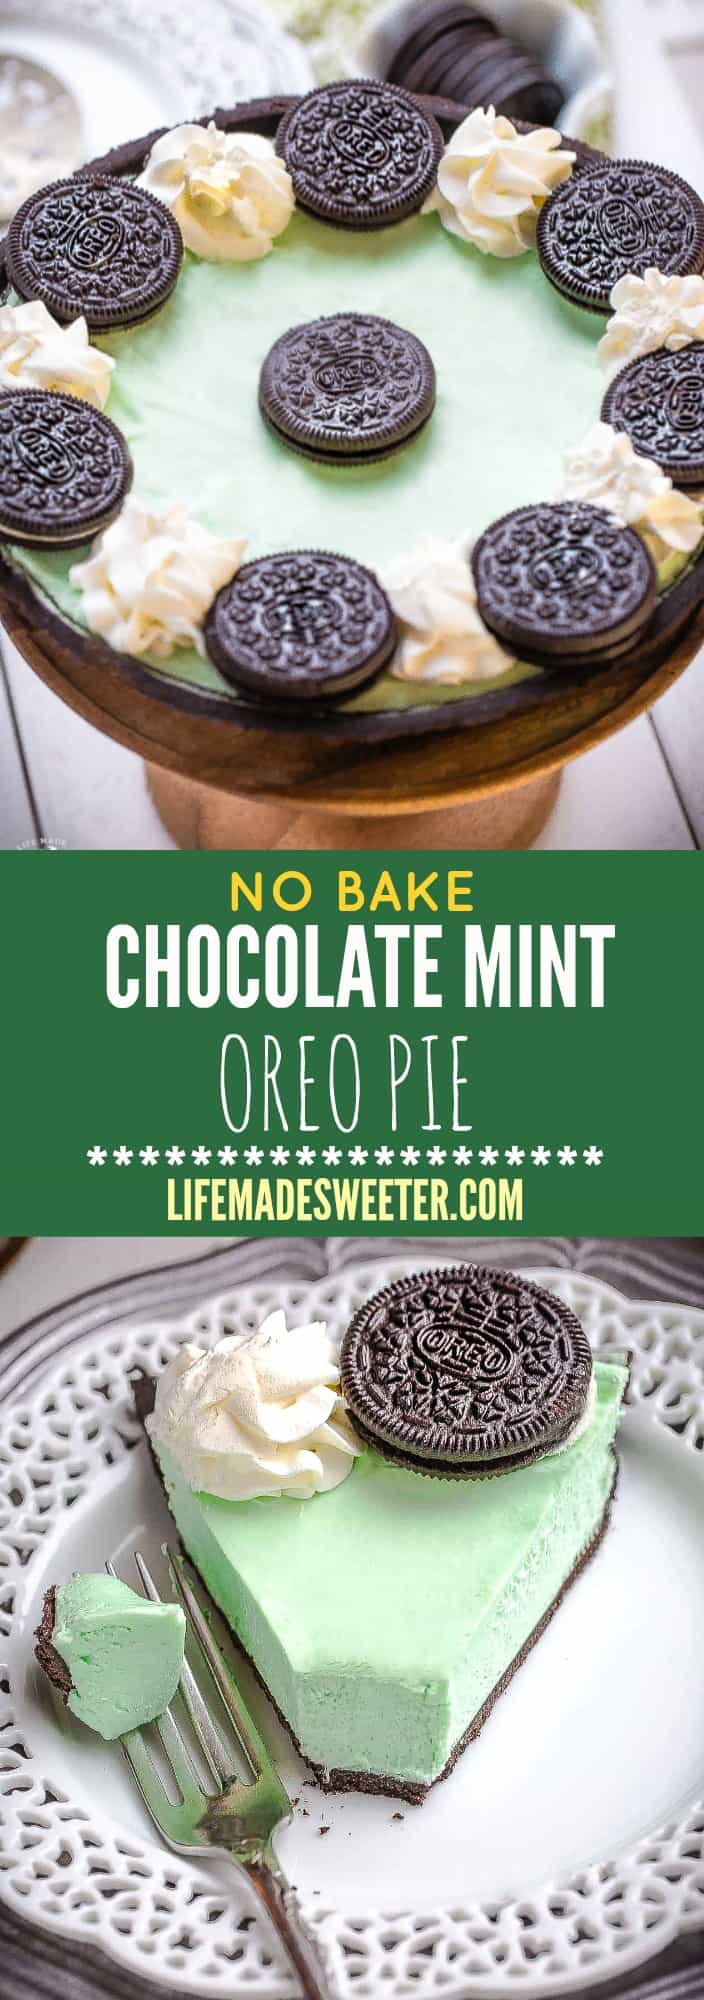 No Bake Chocolate Mint Oreo Pie makes the perfect easy dessert